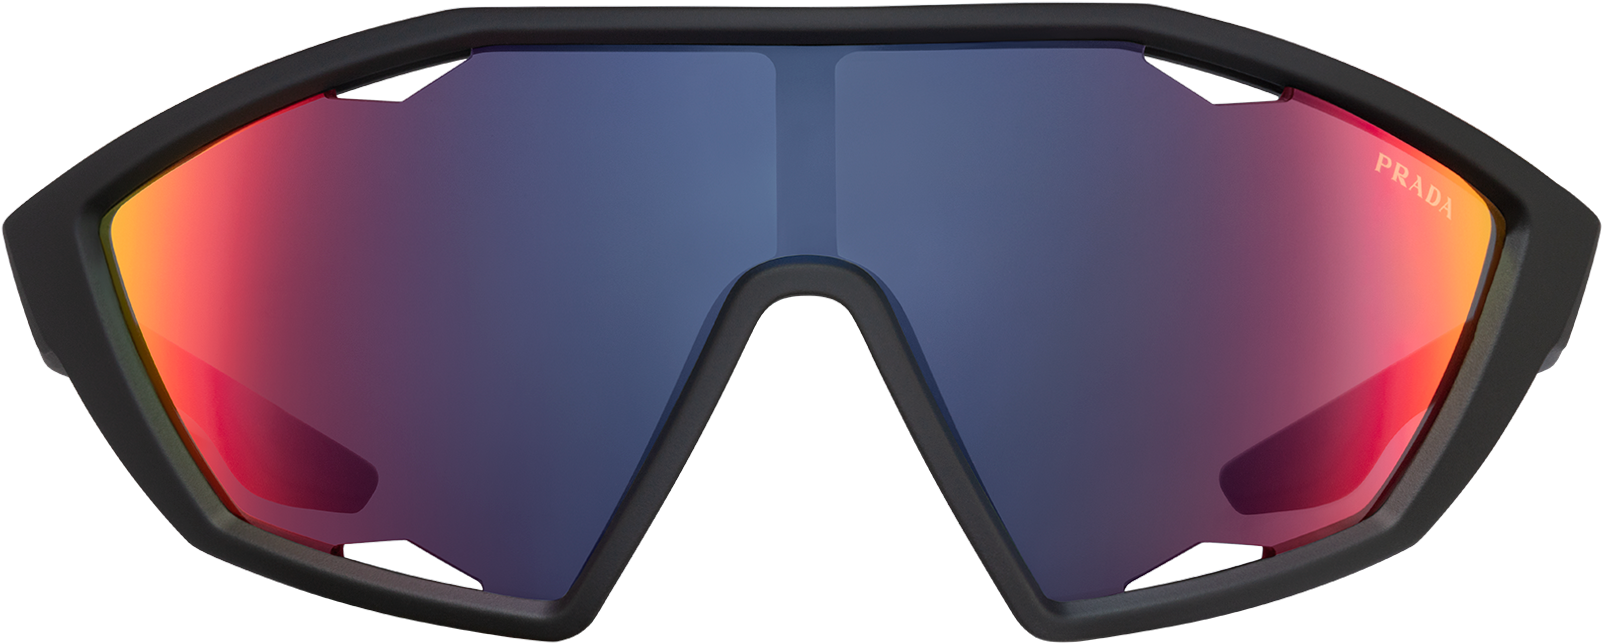 Prada Linea Rossa Sunglasses Clipart (2400x2400), Png Download